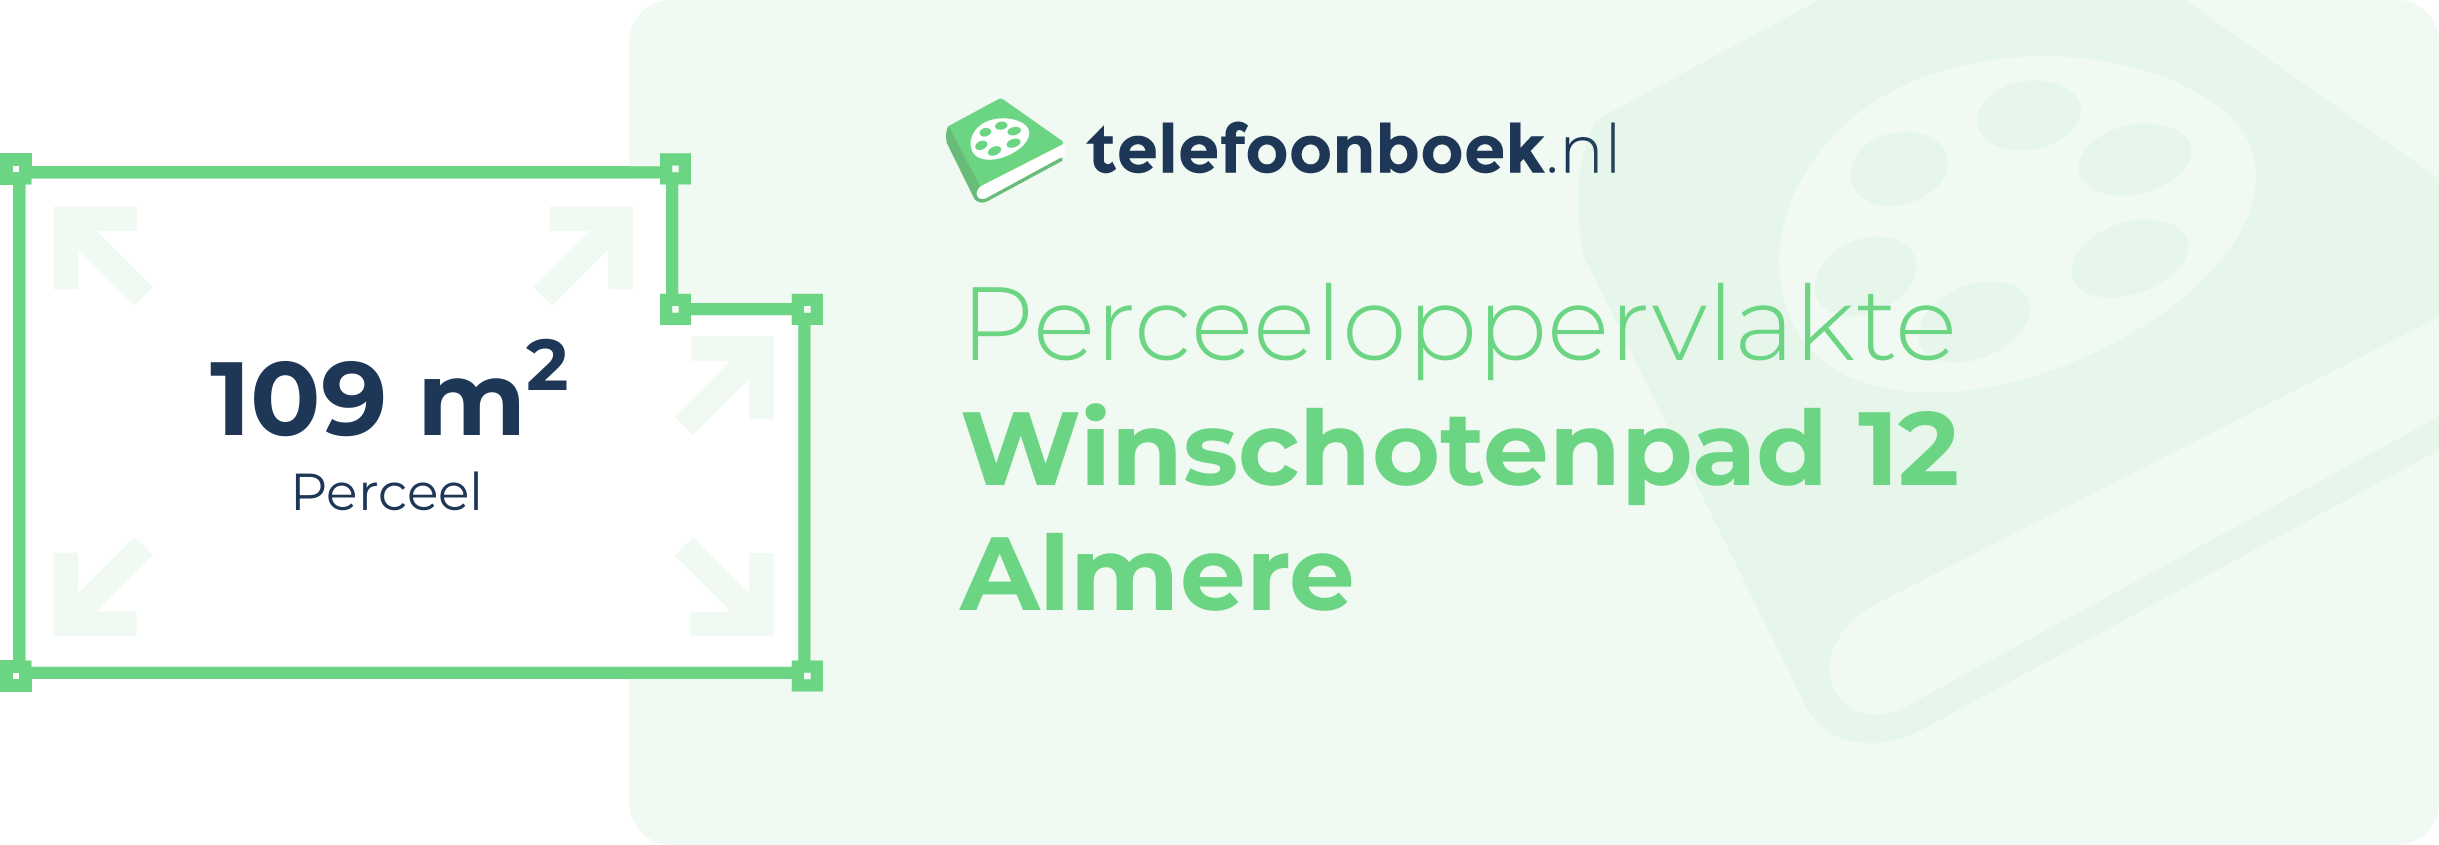 Perceeloppervlakte Winschotenpad 12 Almere